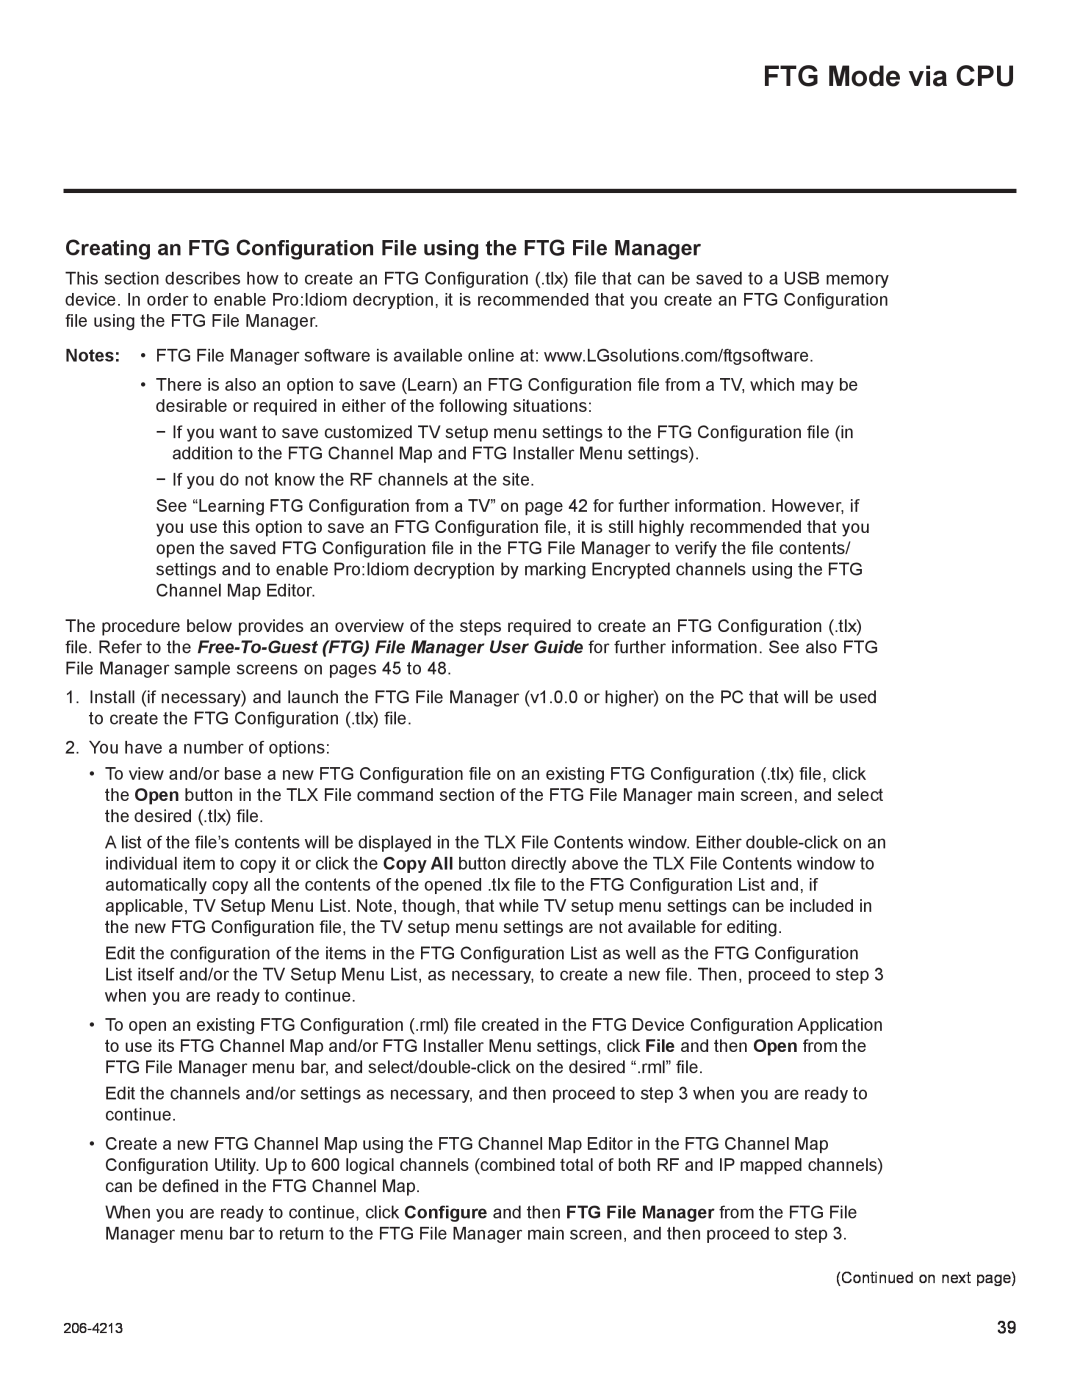 LG Electronics 26LT670H, 55LS675H, 42LT670H FTG Mode via CPU, Creating an FTG Configuration File using the FTG File Manager 